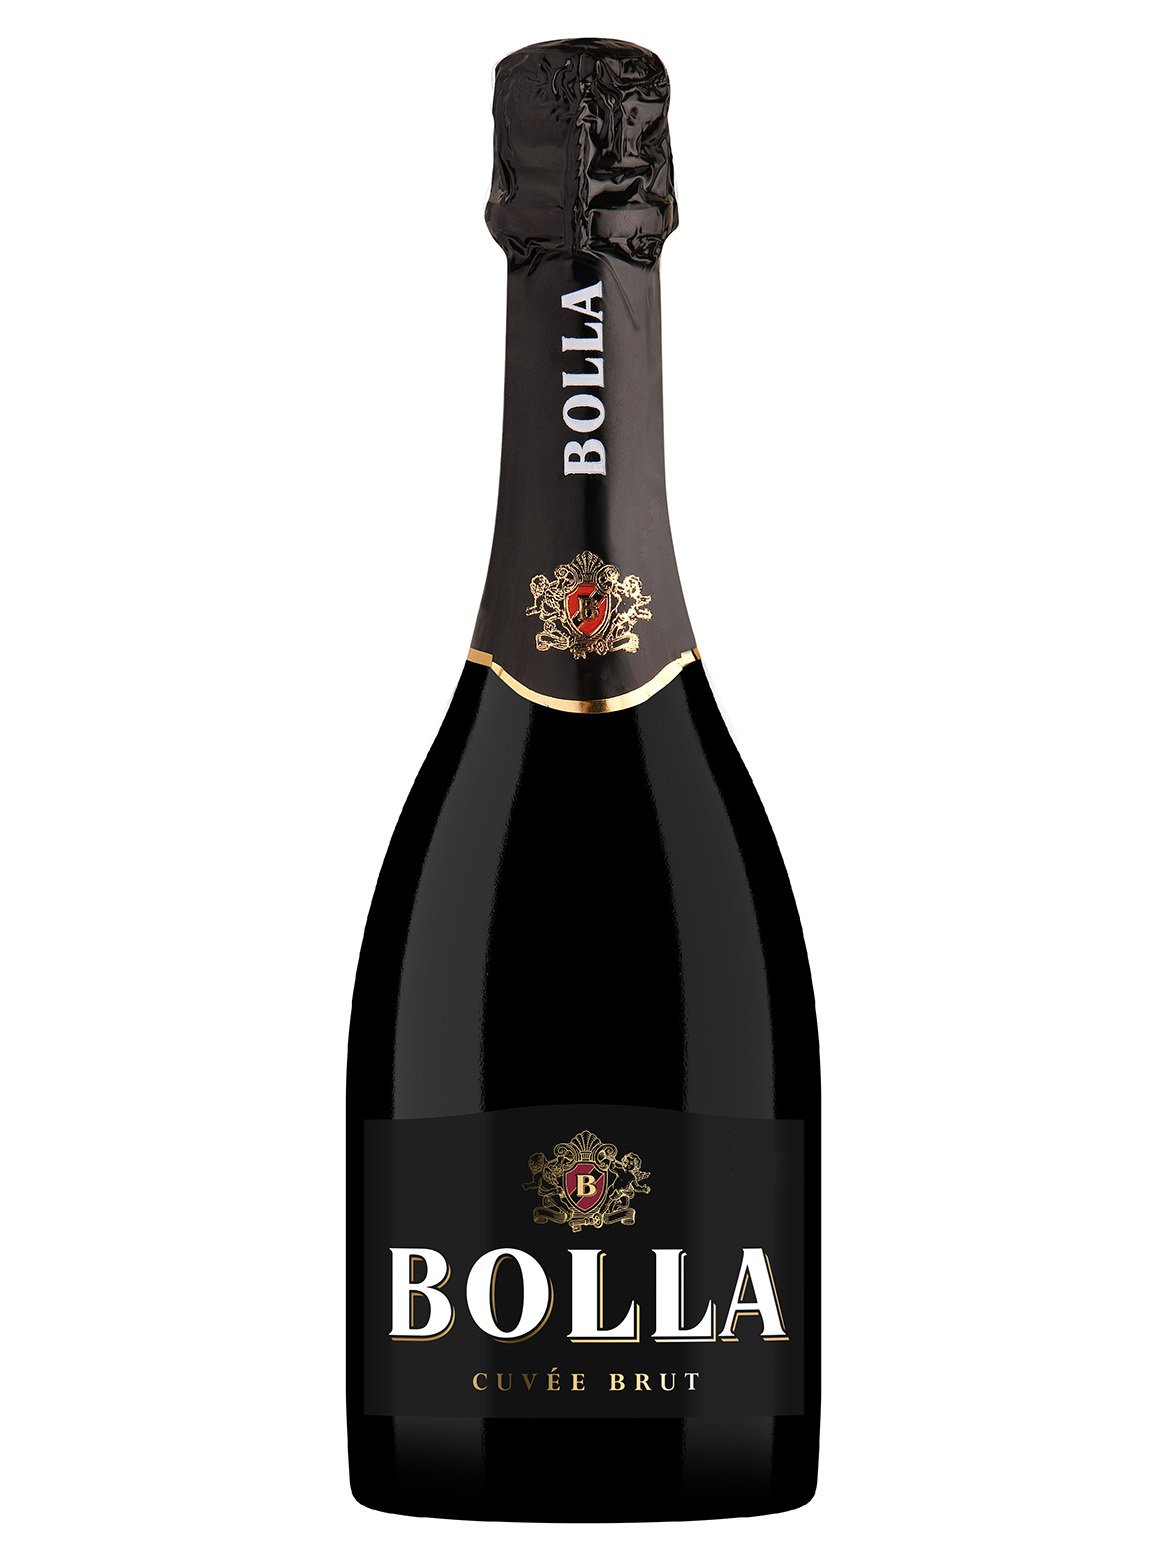 CUVEE BOLLA - Cuvée Bolla Brut